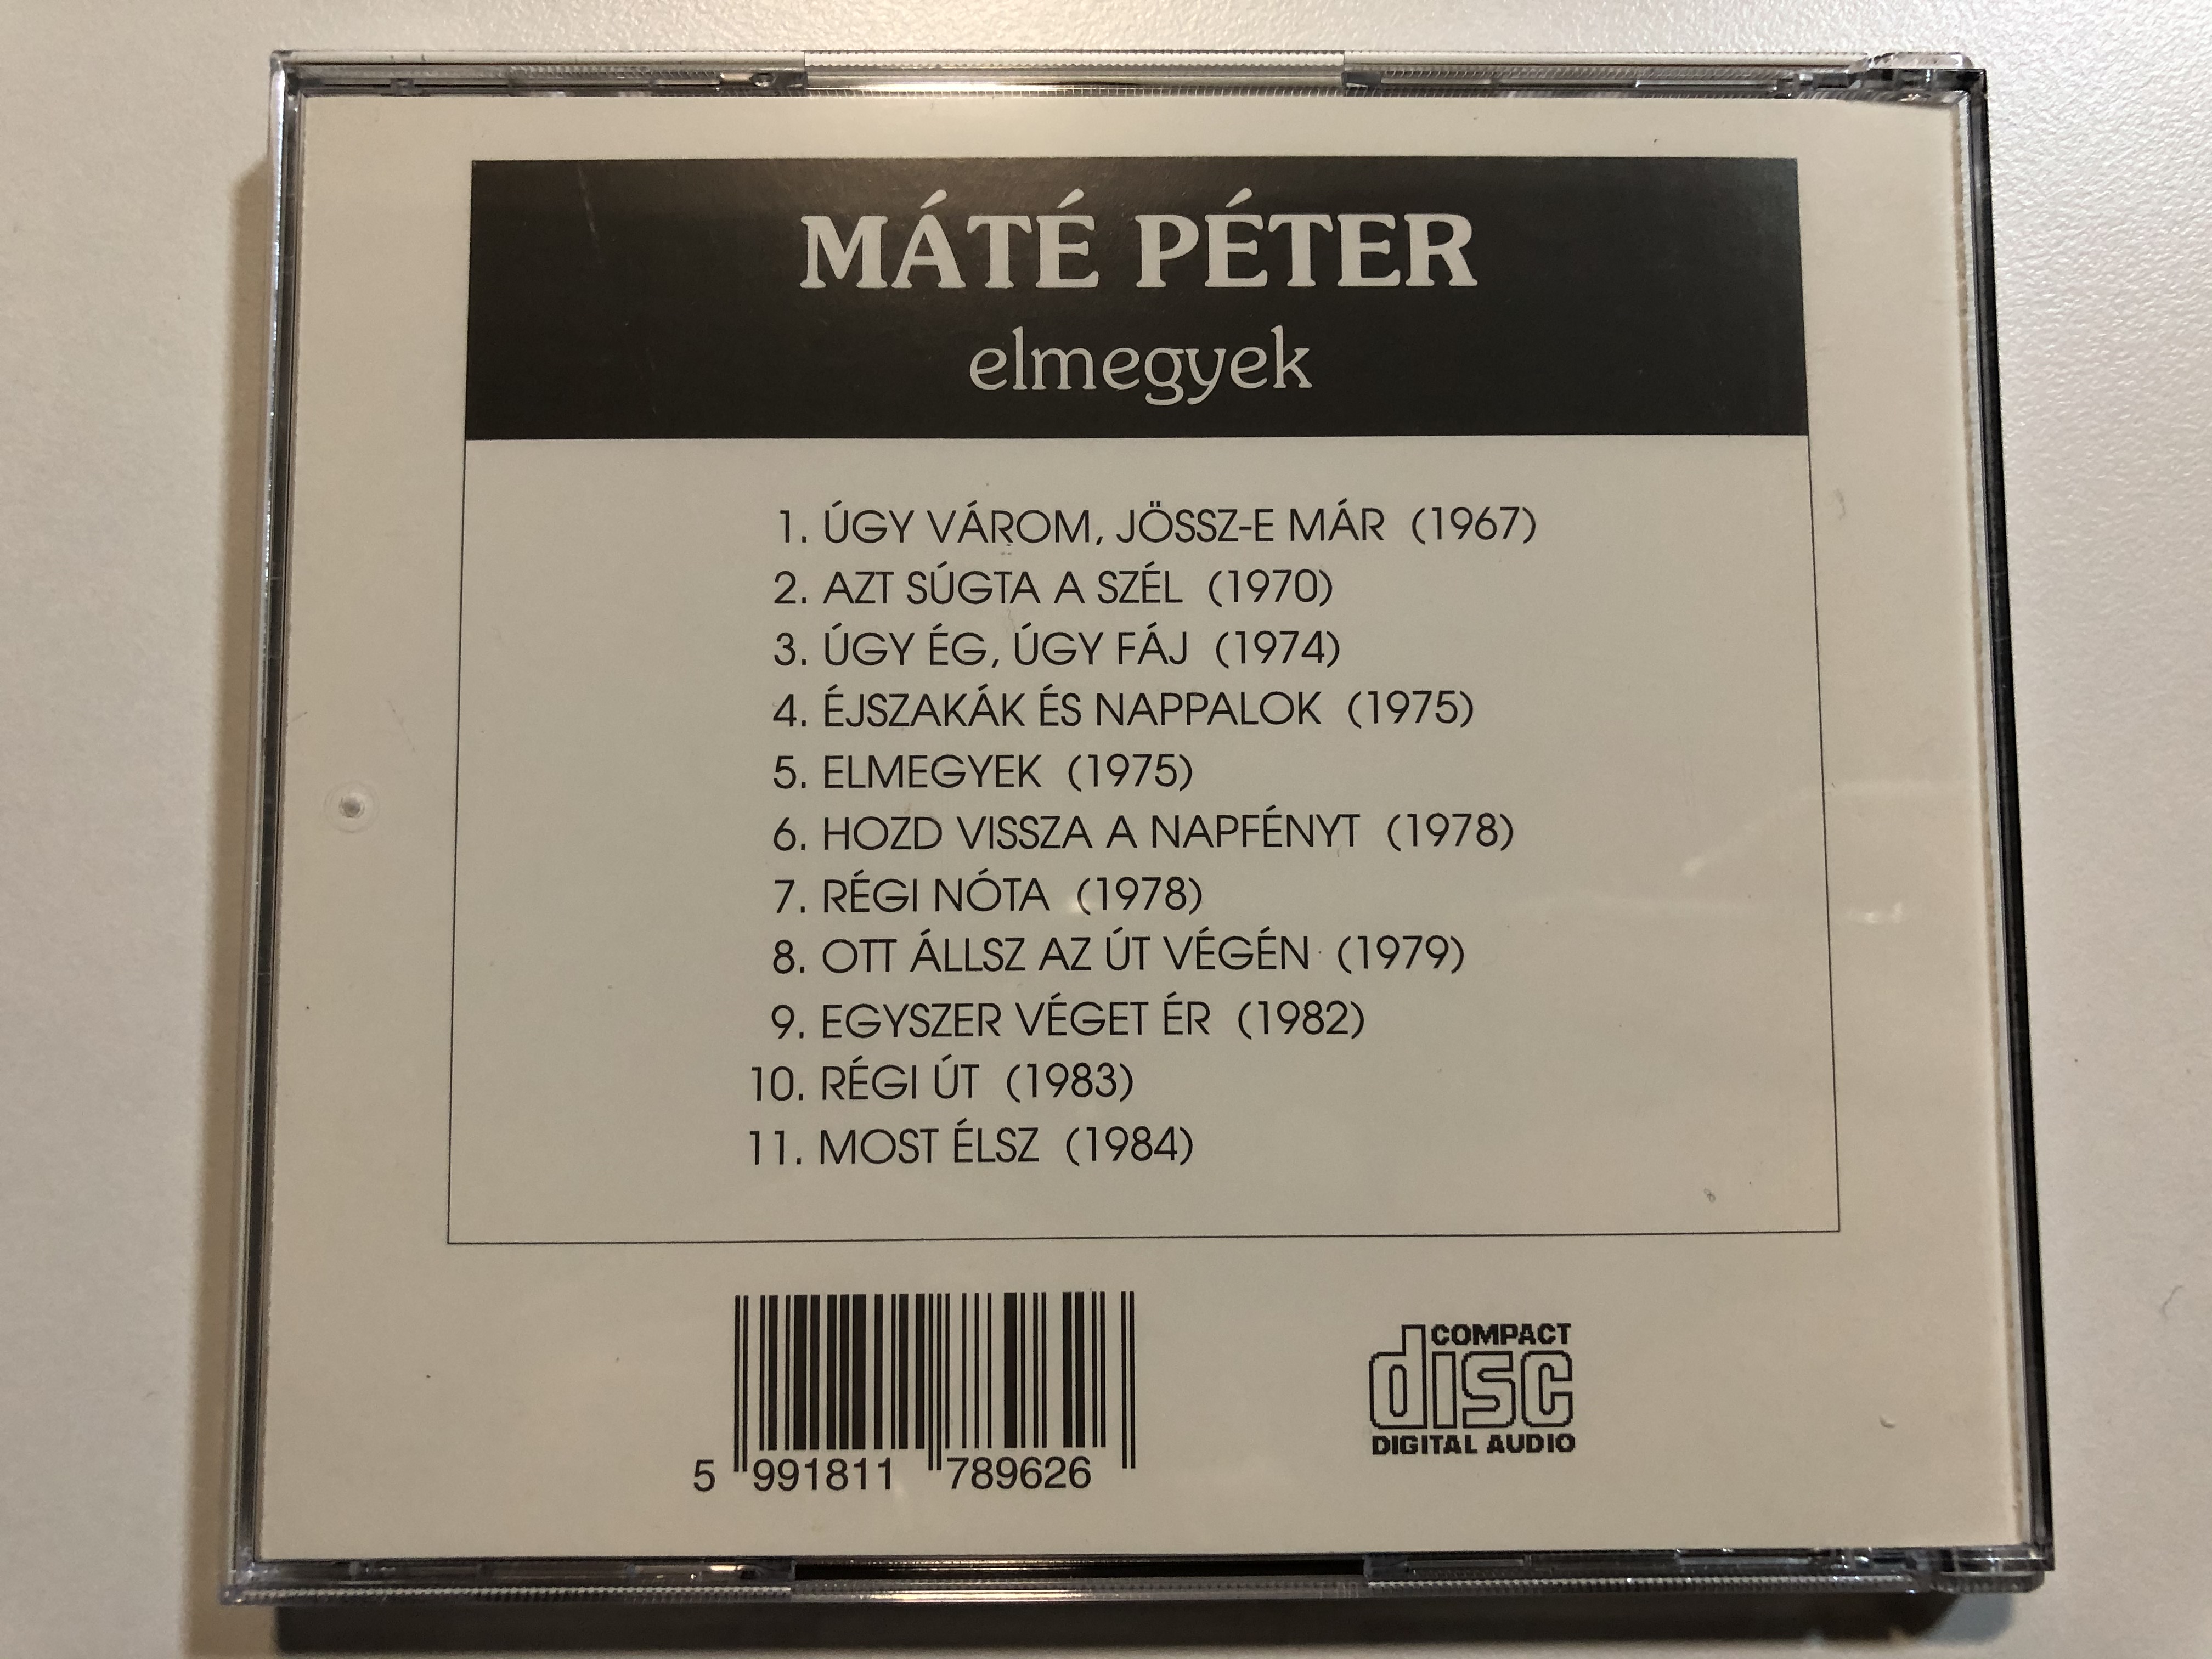 mate-peter-elmegyek-gong-audio-cd-1995-hcd-17896-5-.jpg